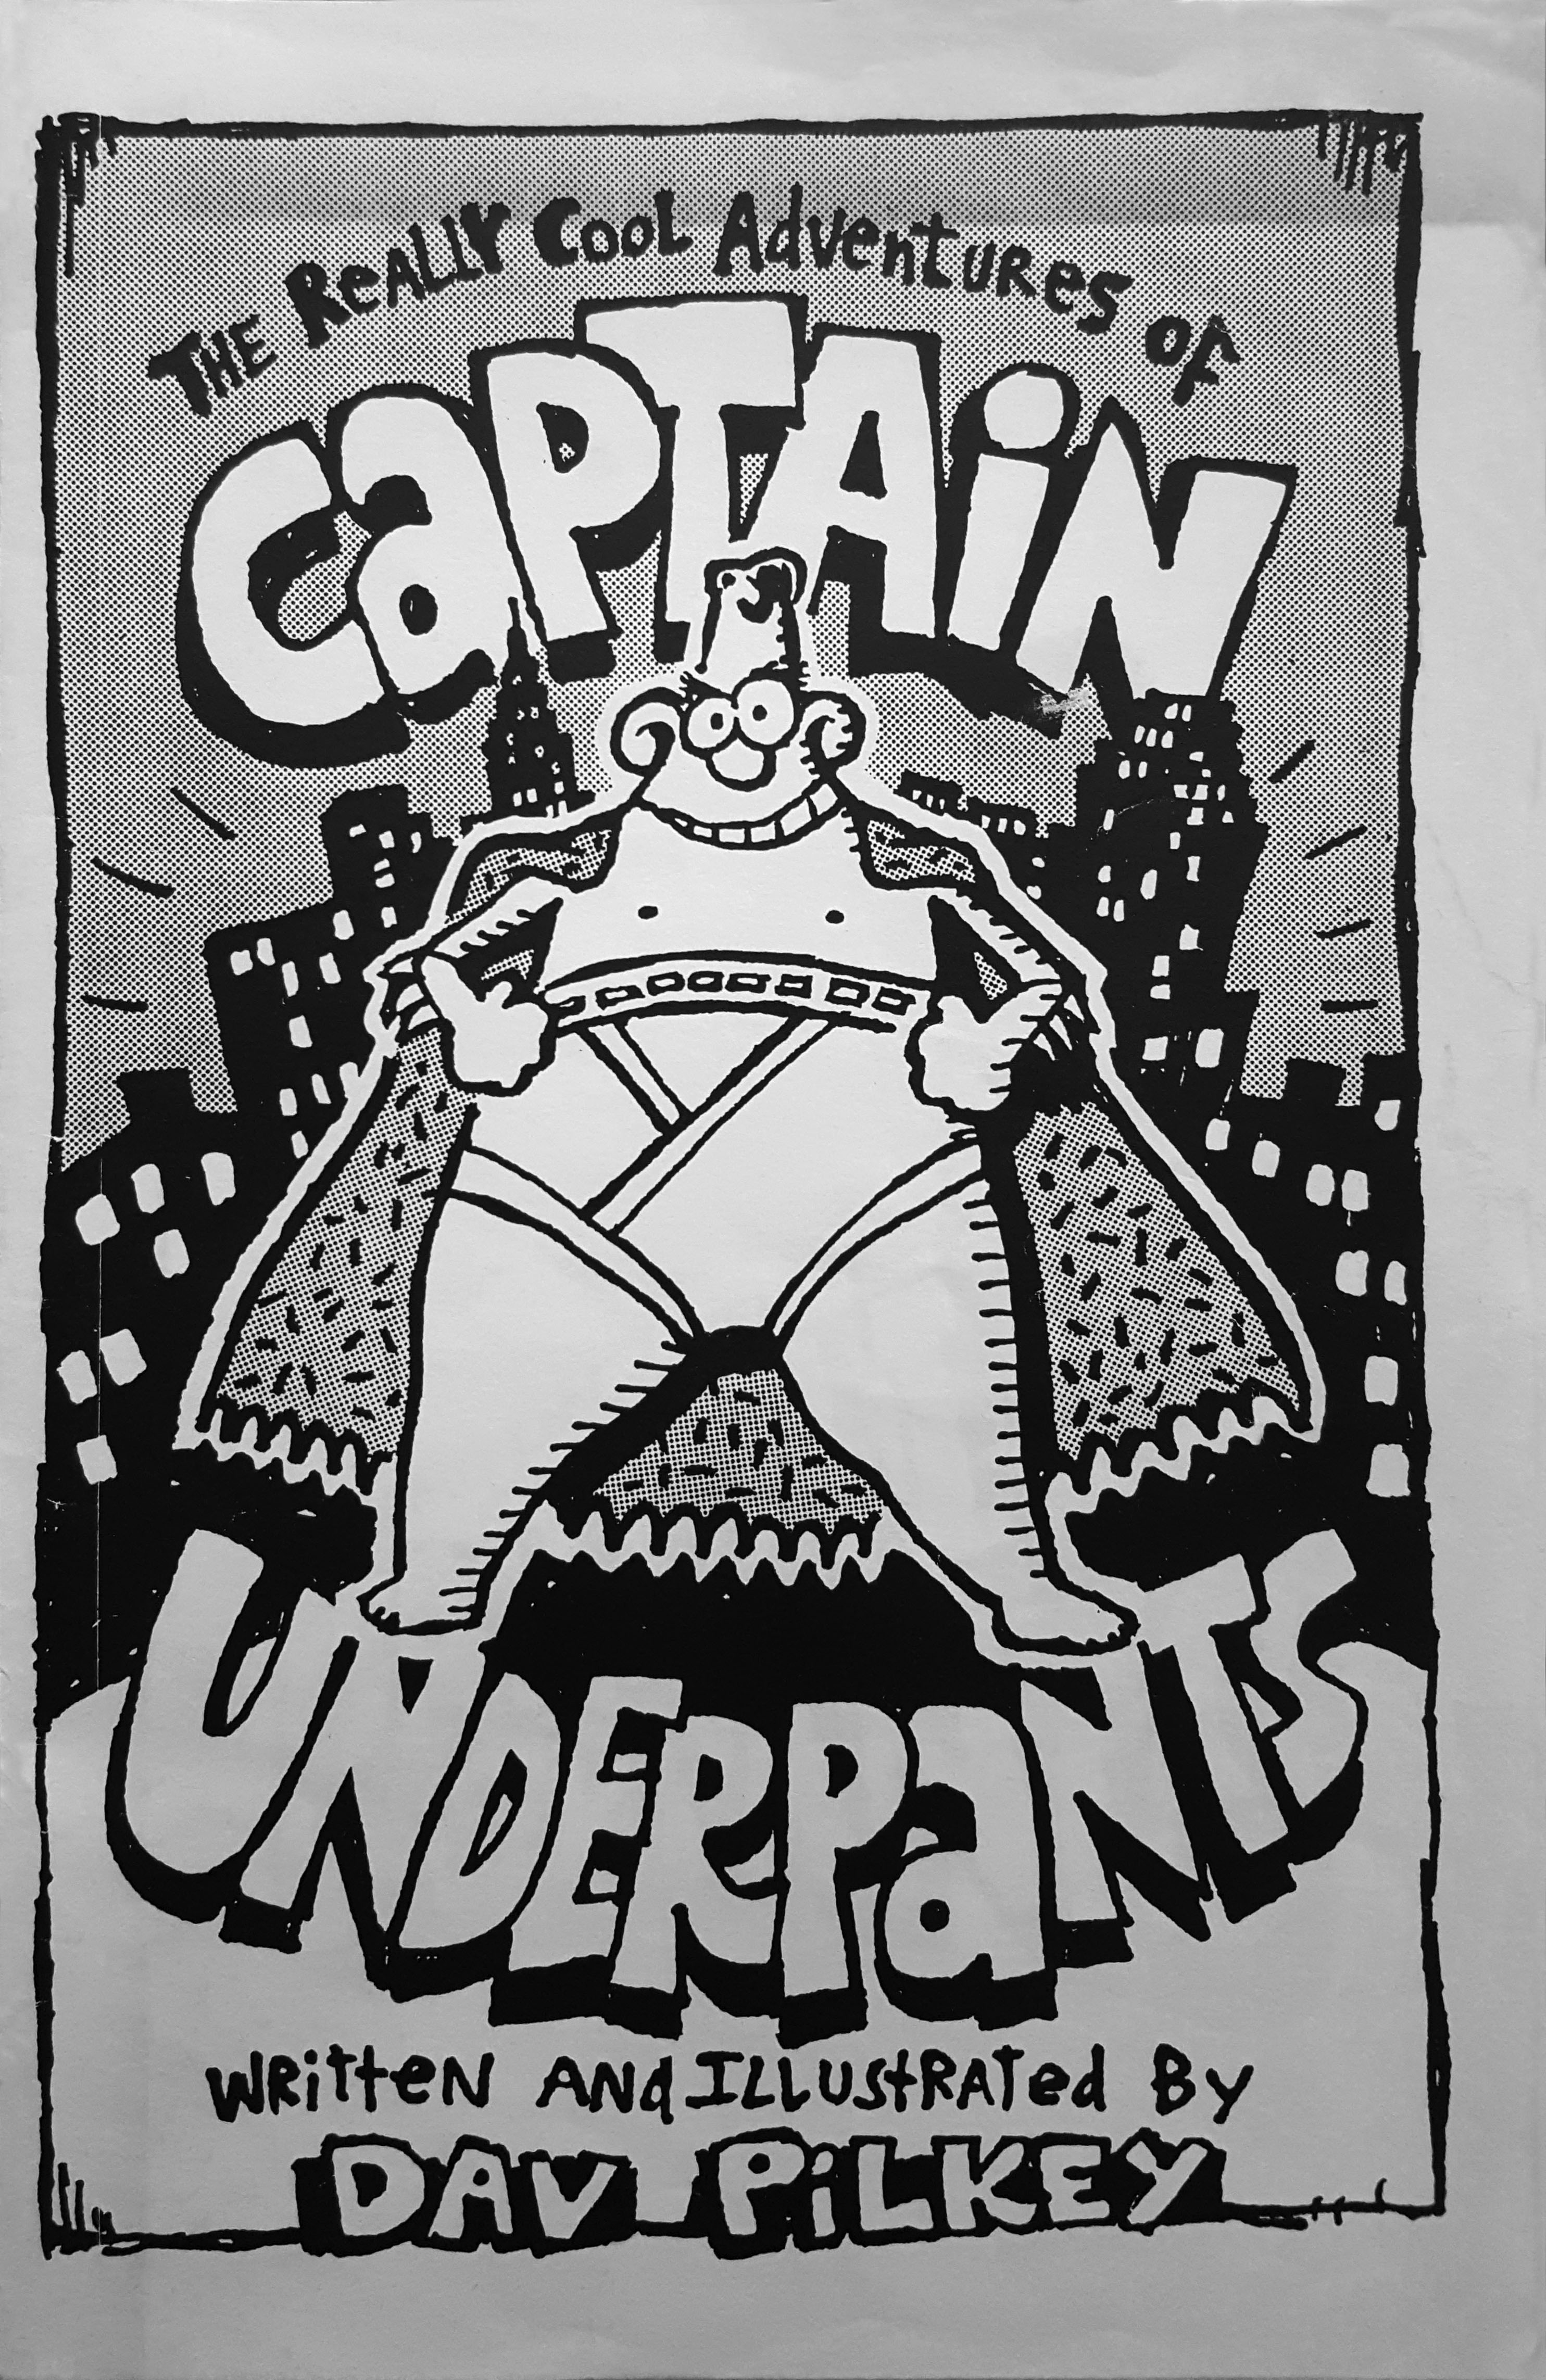 2006 Scholastic Captain Underpants Books Print Ad/Poster Dav Pilkey Retro  Art